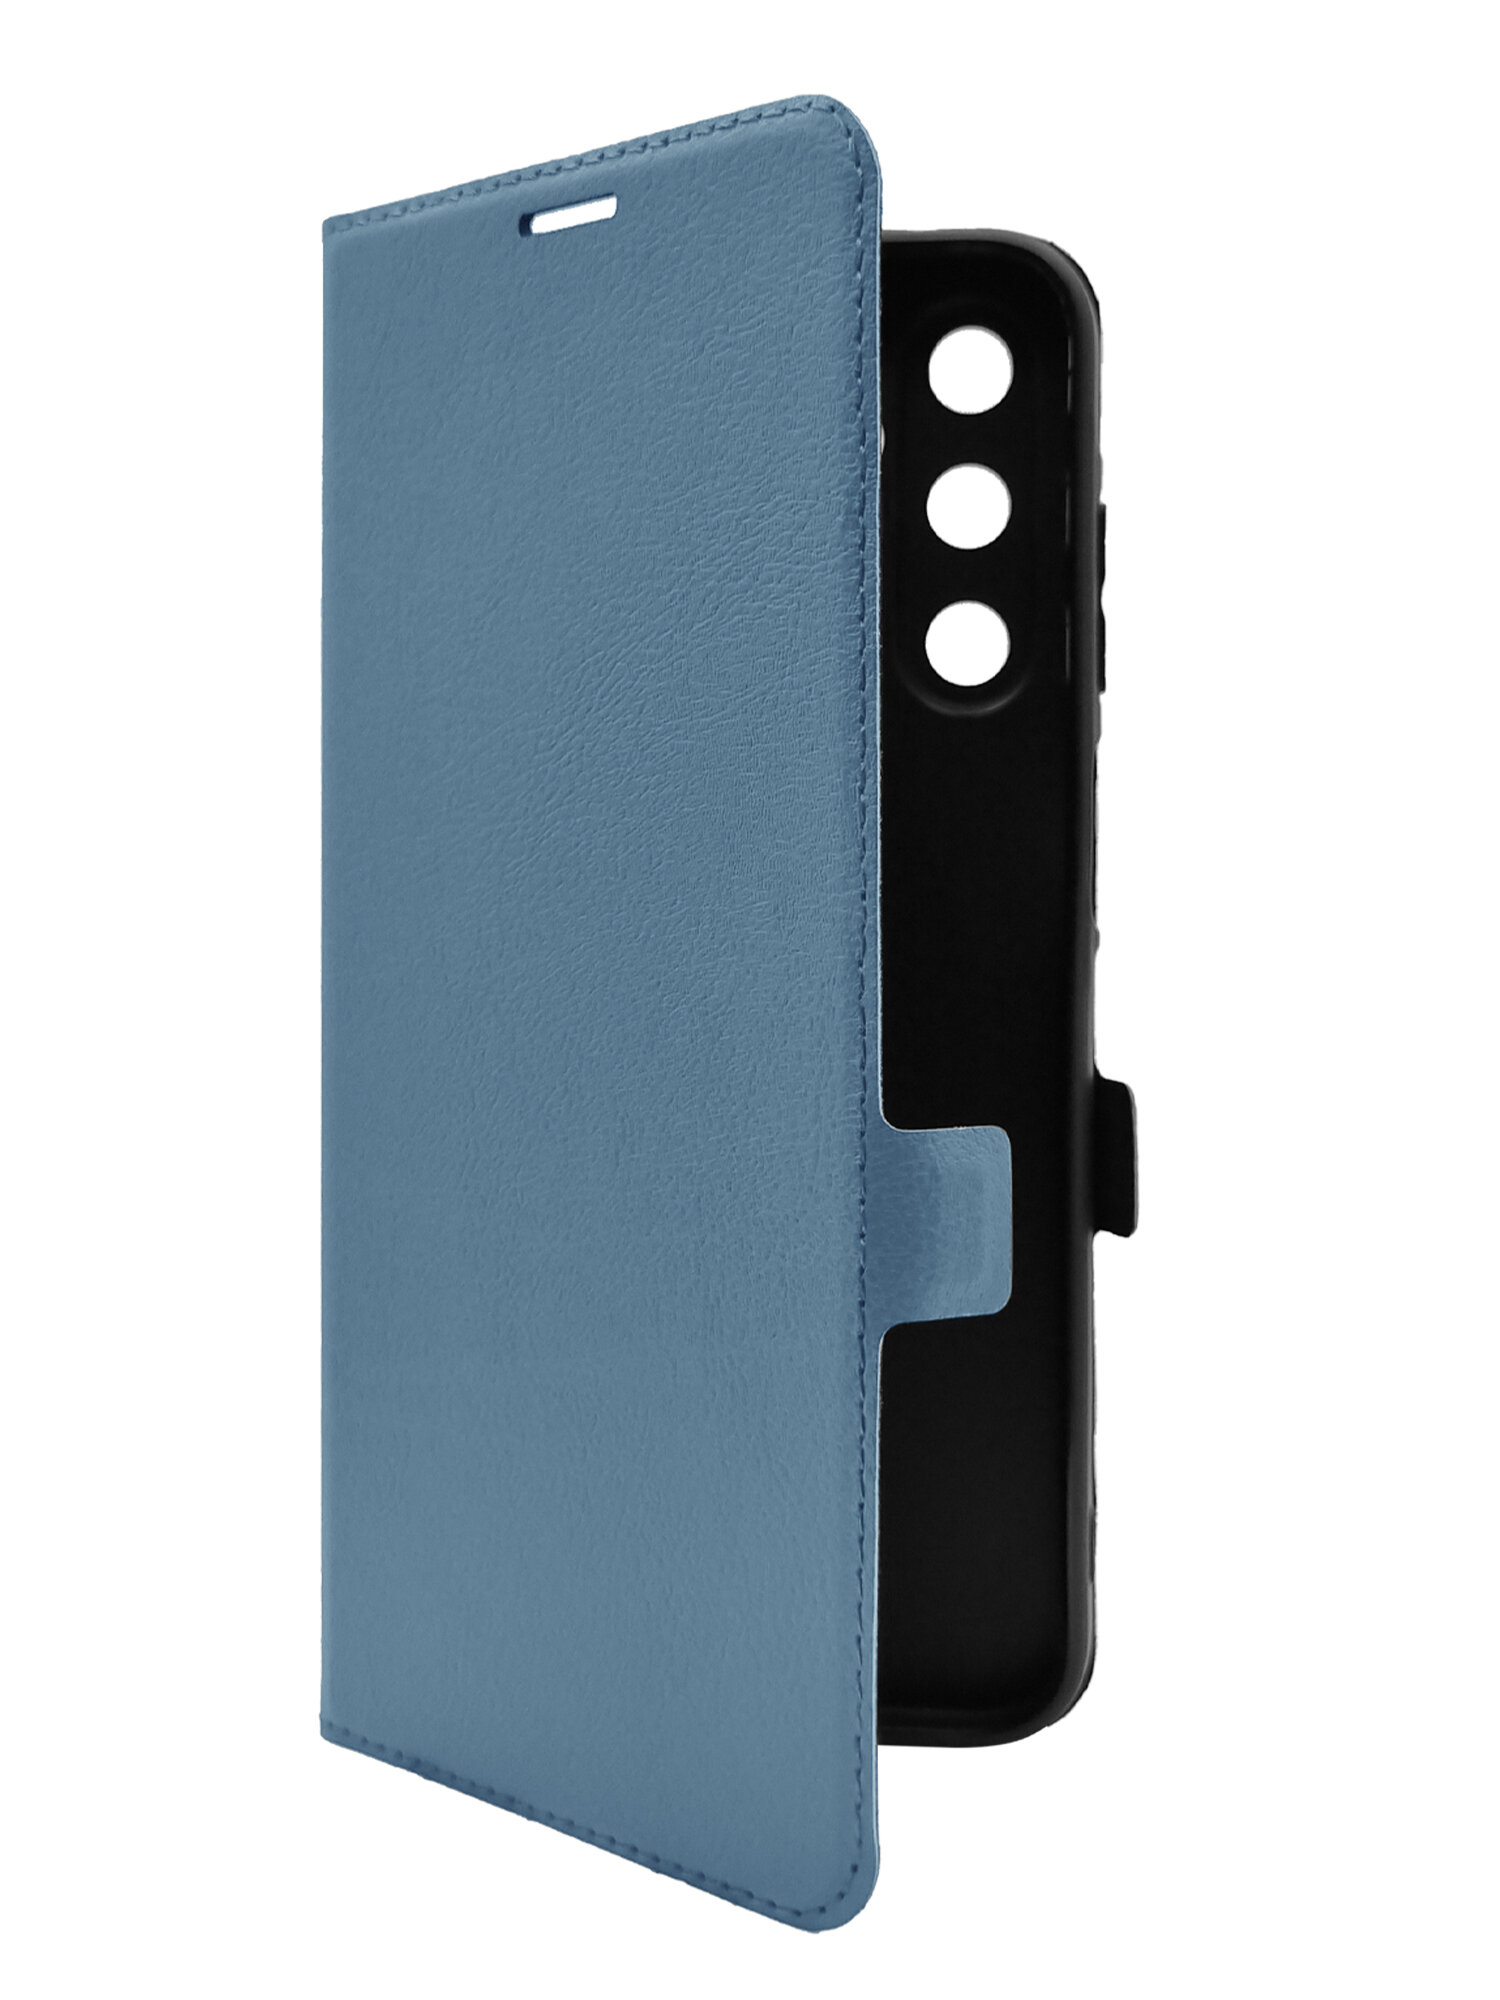 Чехол на Samsung Galaxy A15 (Самсунг Галакси А15) синий книжка эко-кожа с функцией подставки отделением для карт и магнитами Book case, Brozo